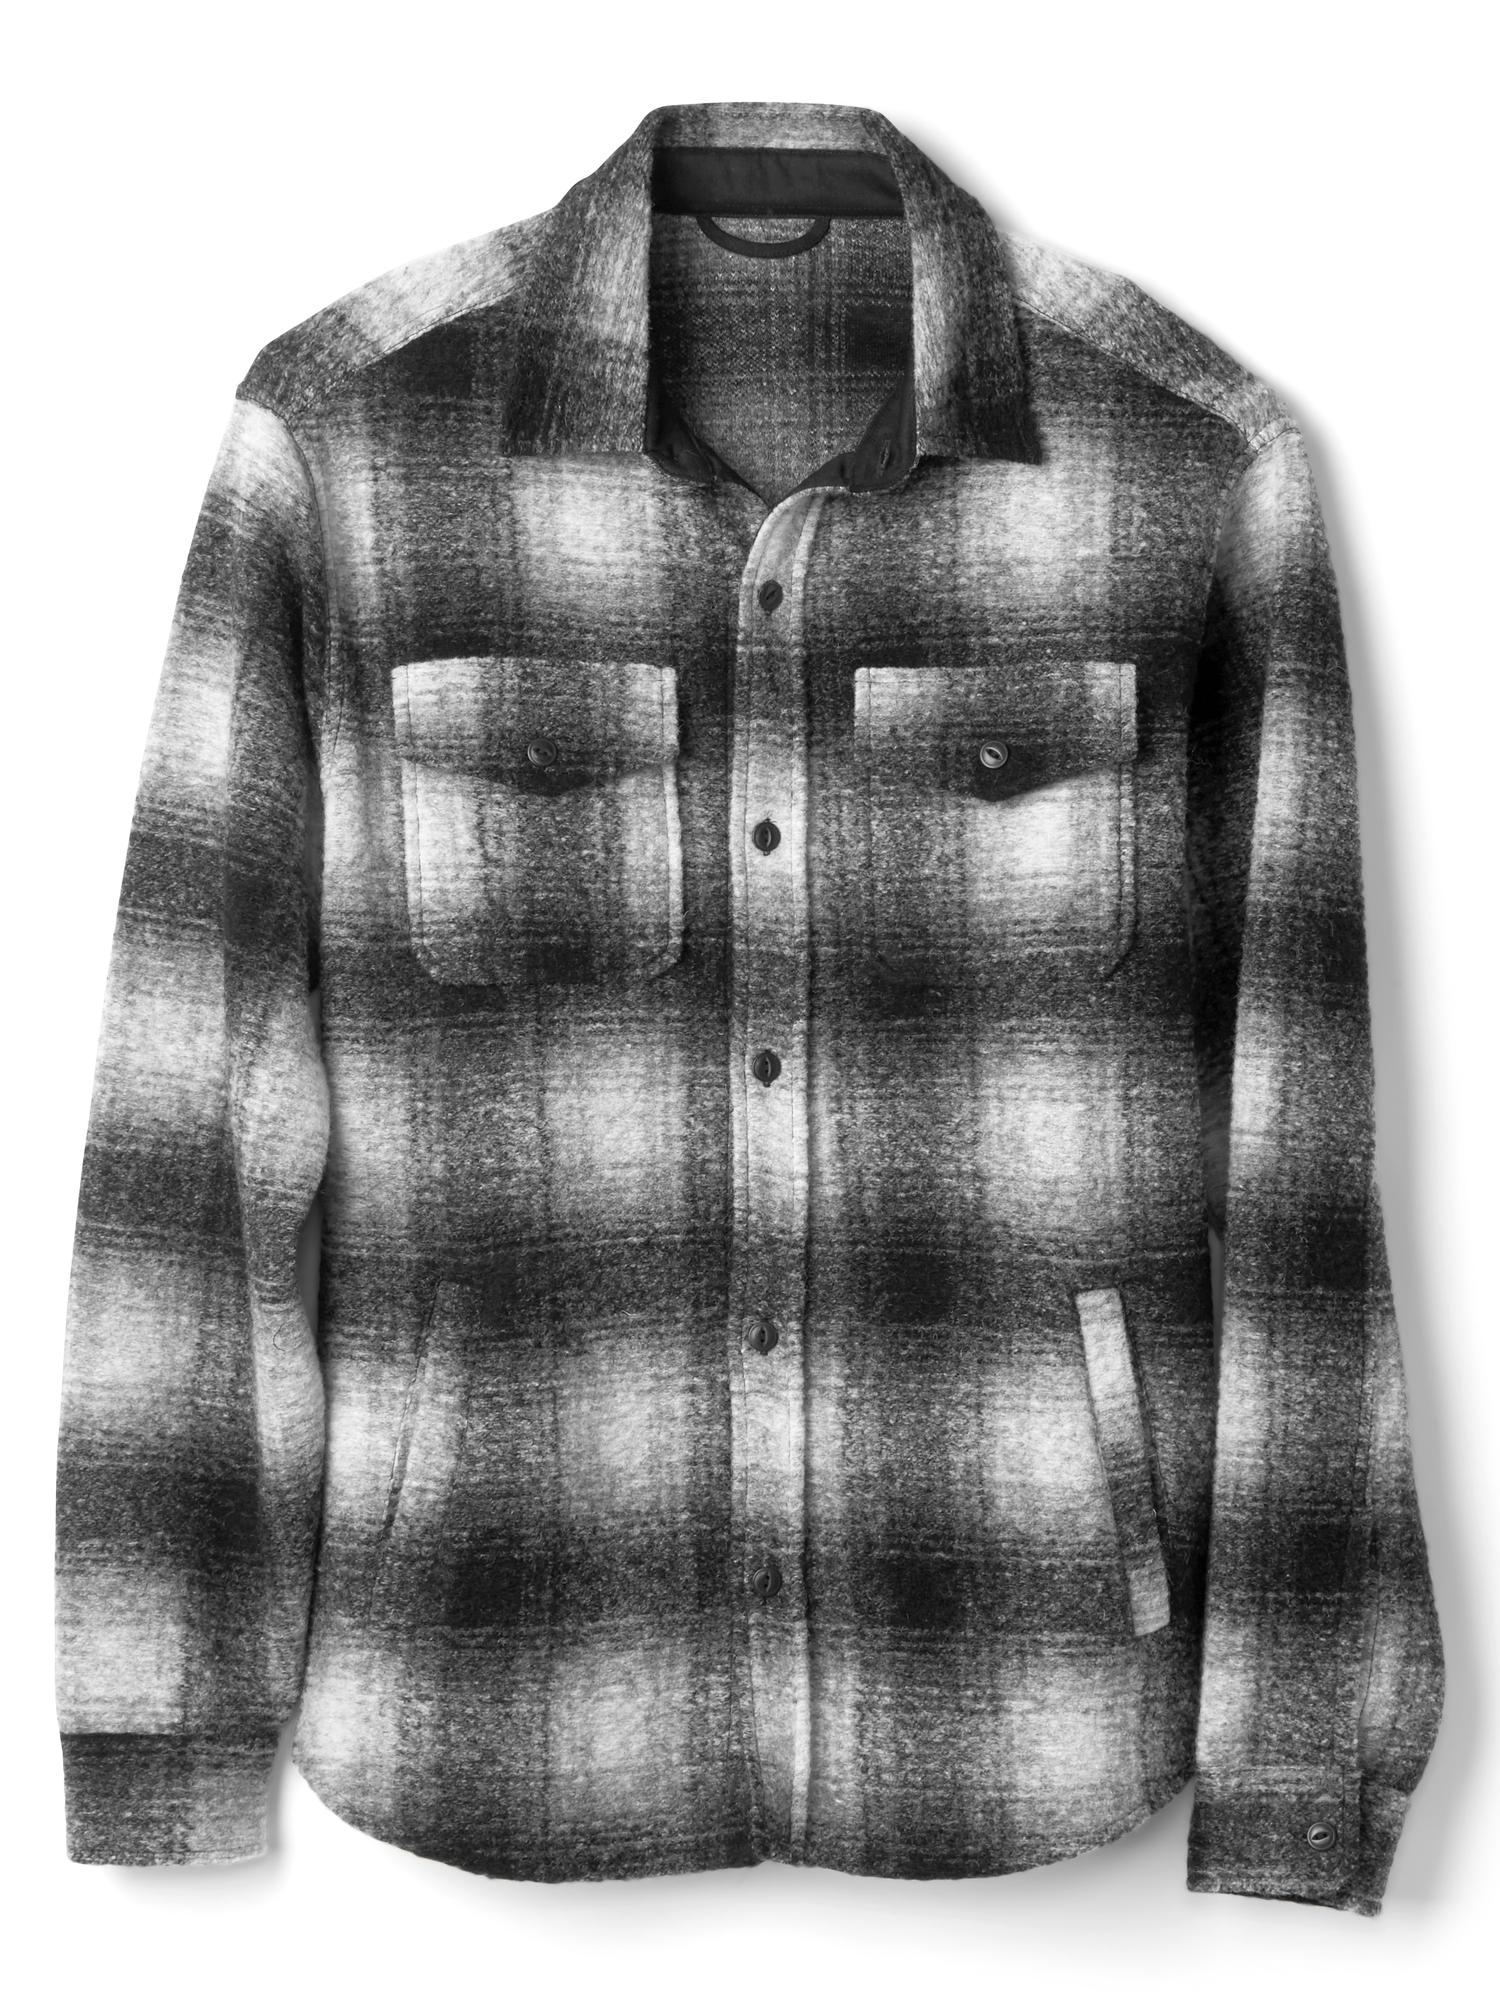 Plaid jacquard utility shirt jacket | Gap